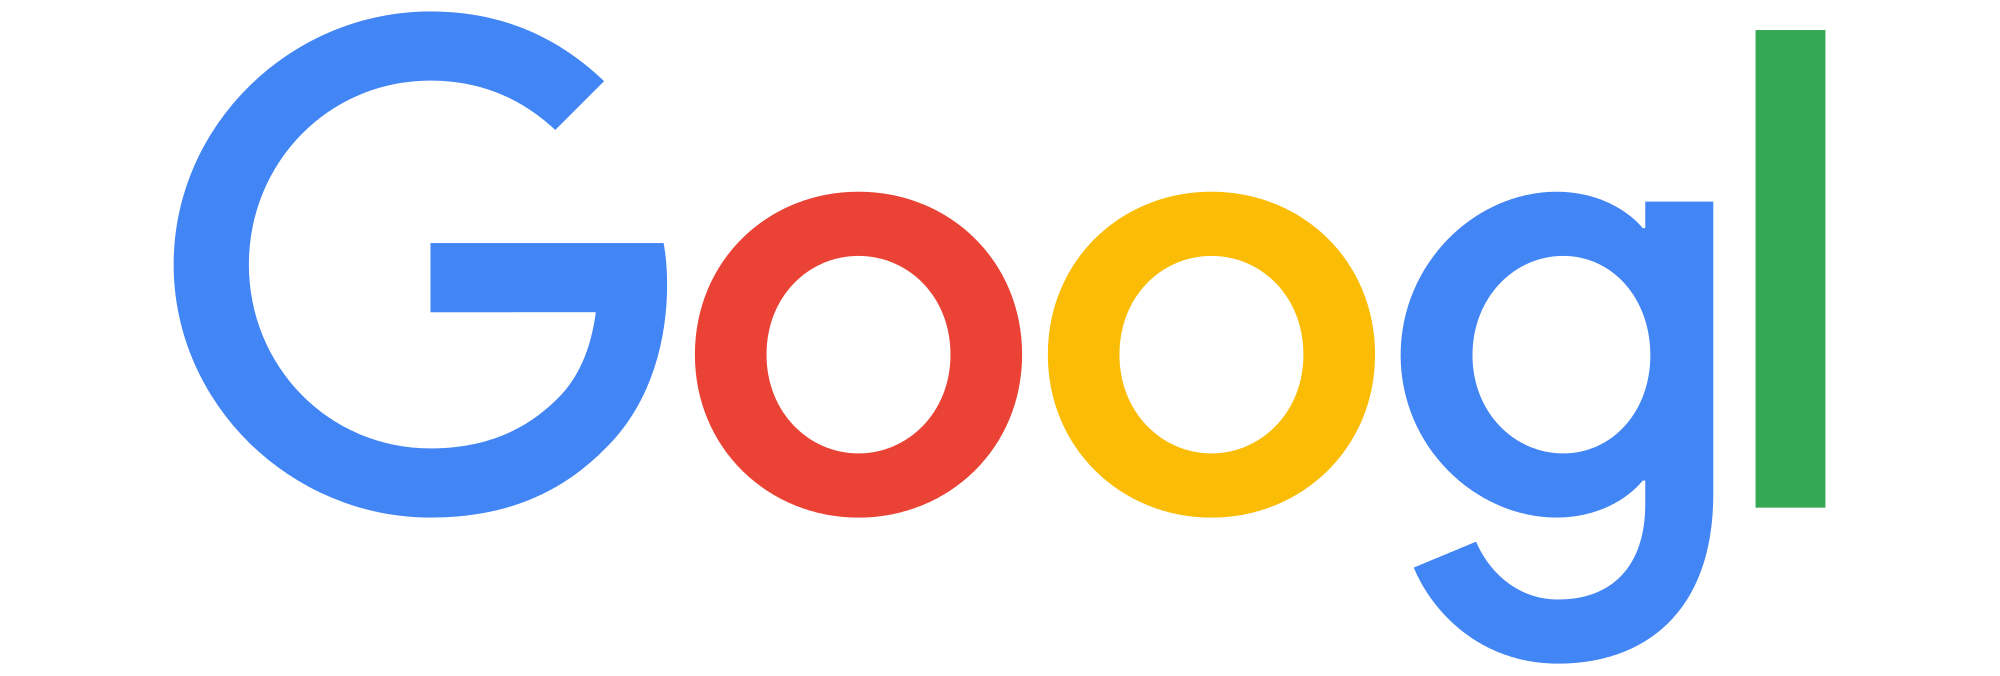 google banner